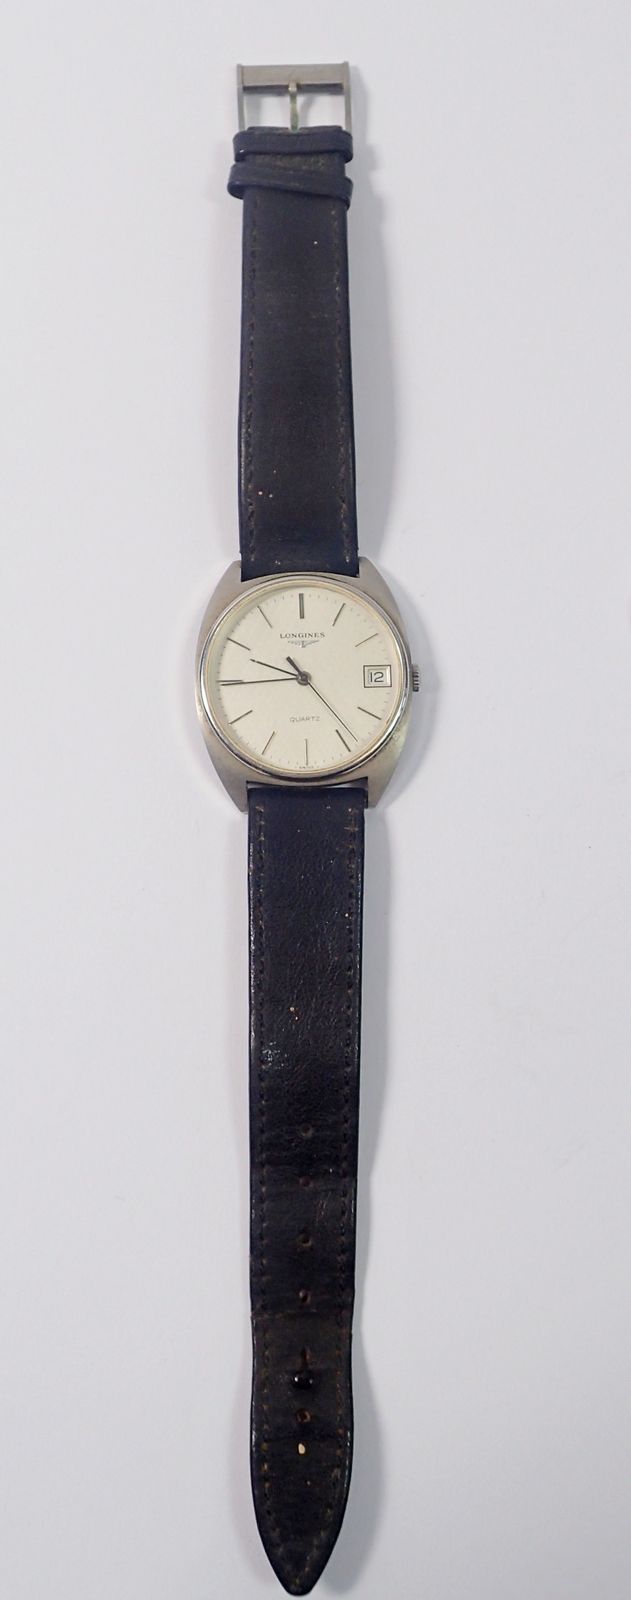 A Longines vintage quartz gentlemen's wrist watch - Image 2 of 3